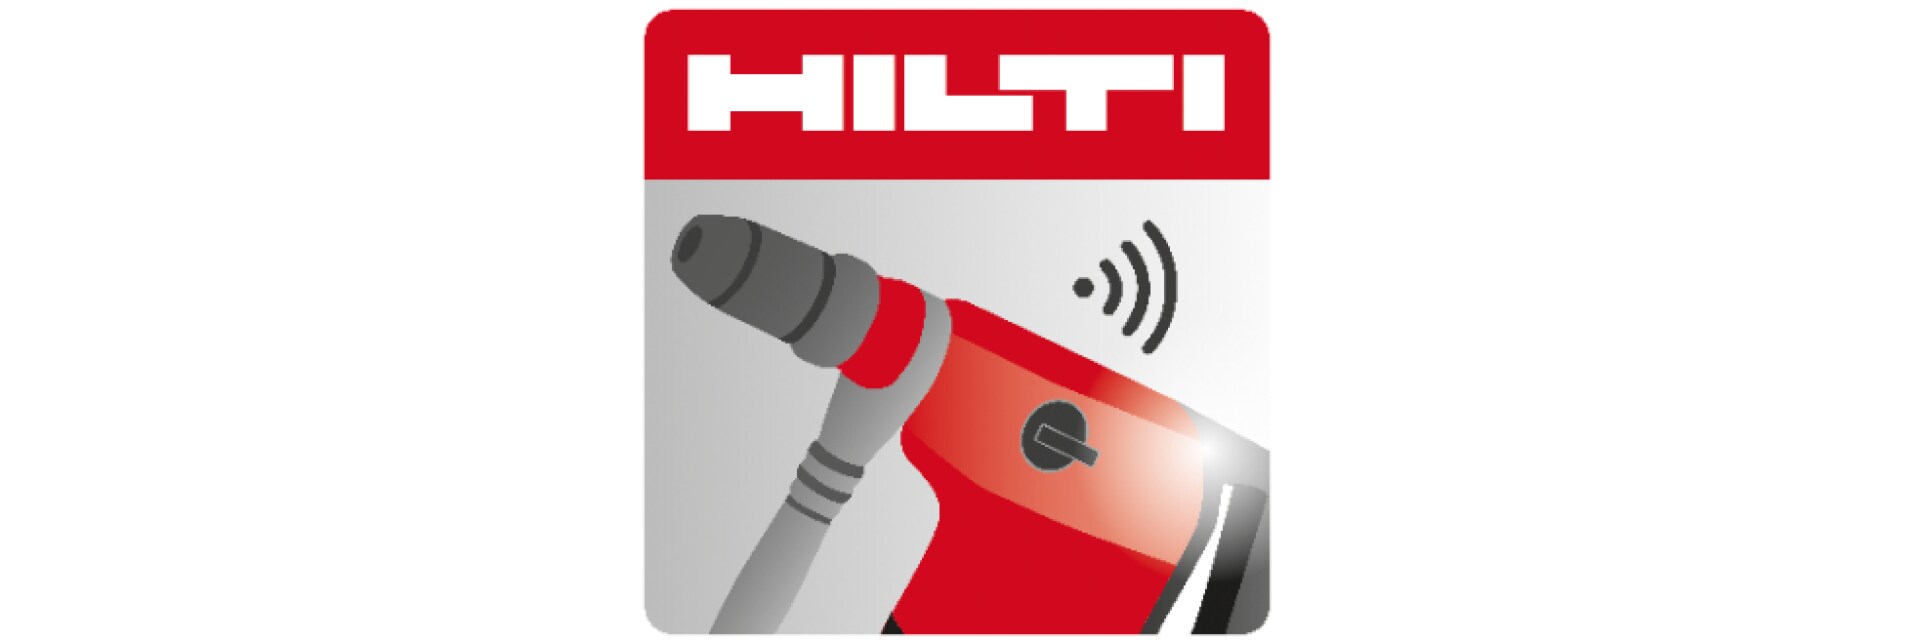 Hilti connect application